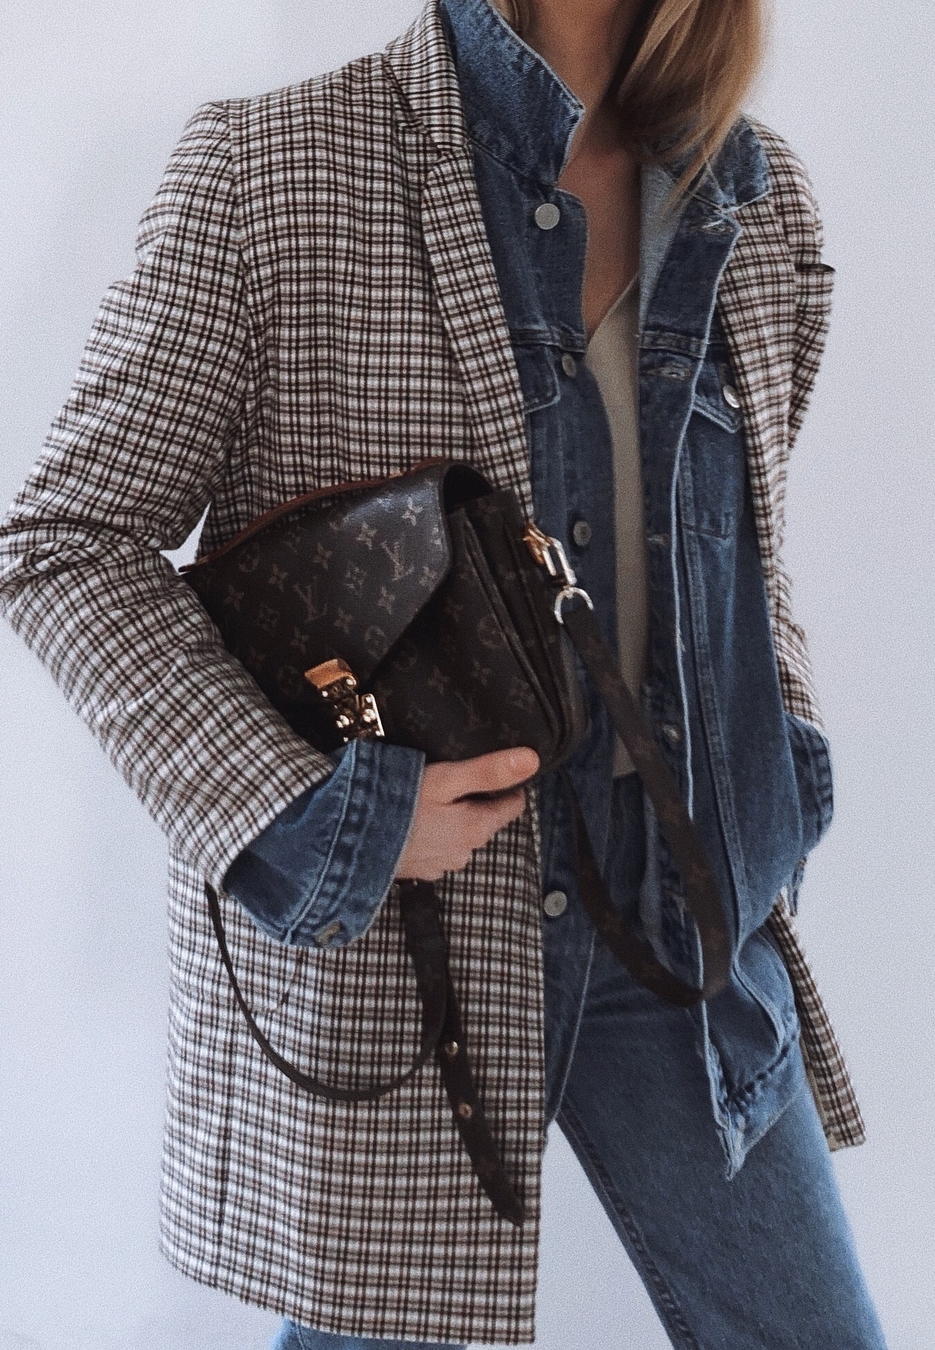 gorgeous layered outfit / plaid blazer + denim jacket + top + bag + jeans